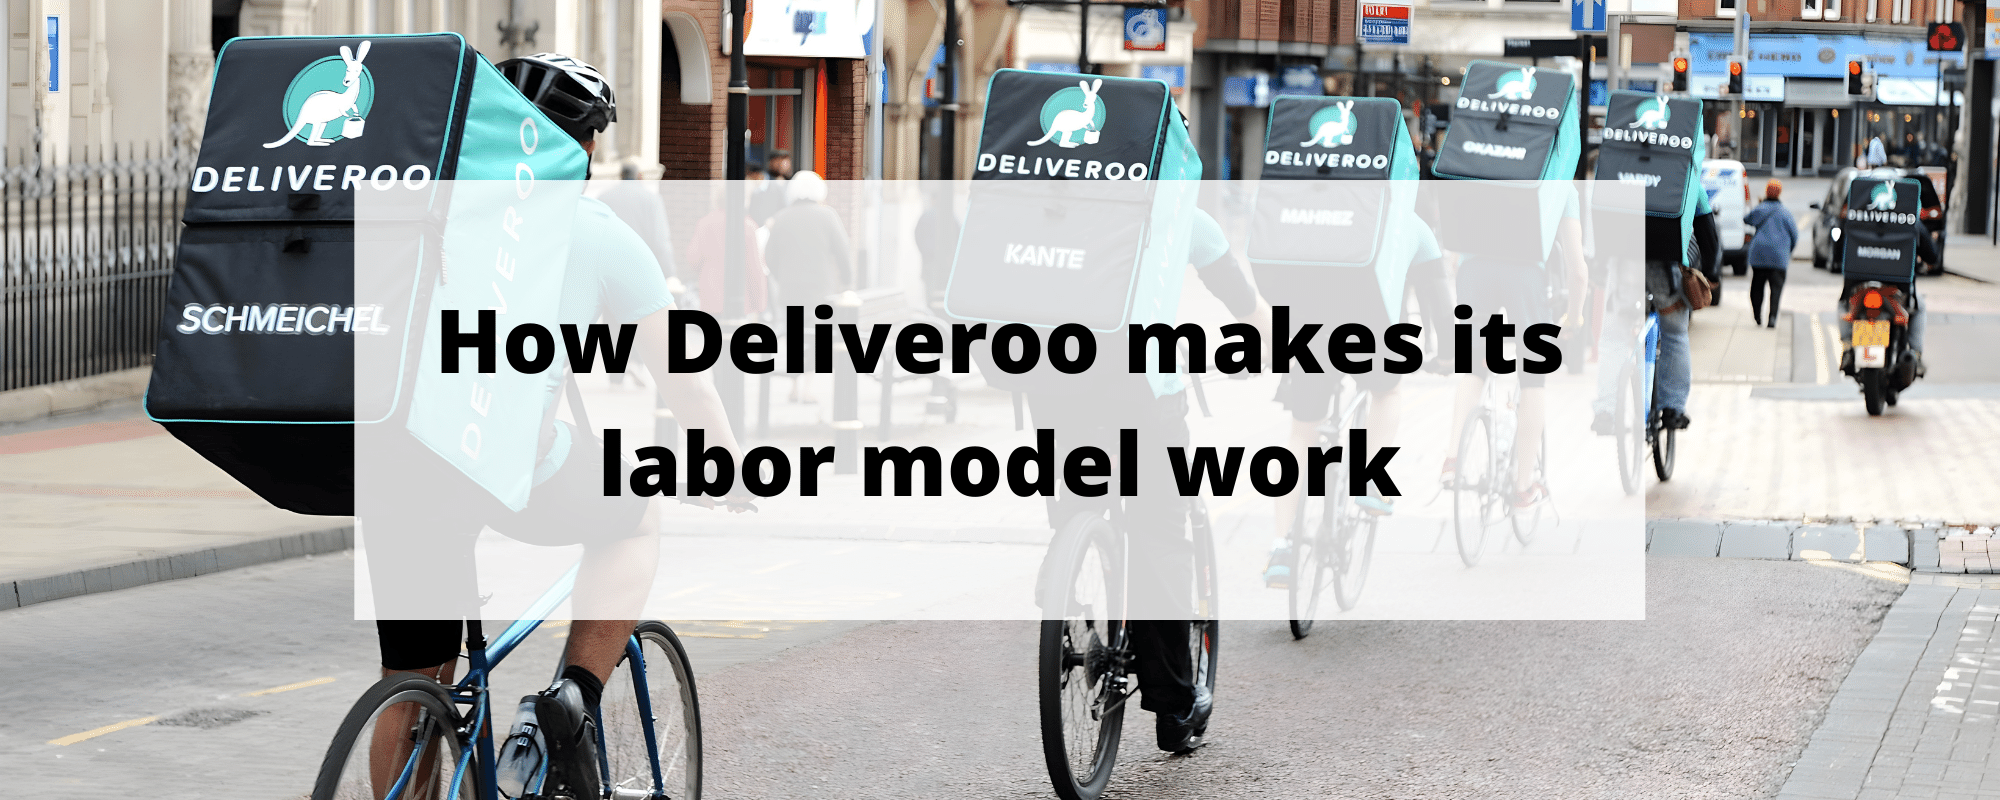 how does deliveroo make its labor model work